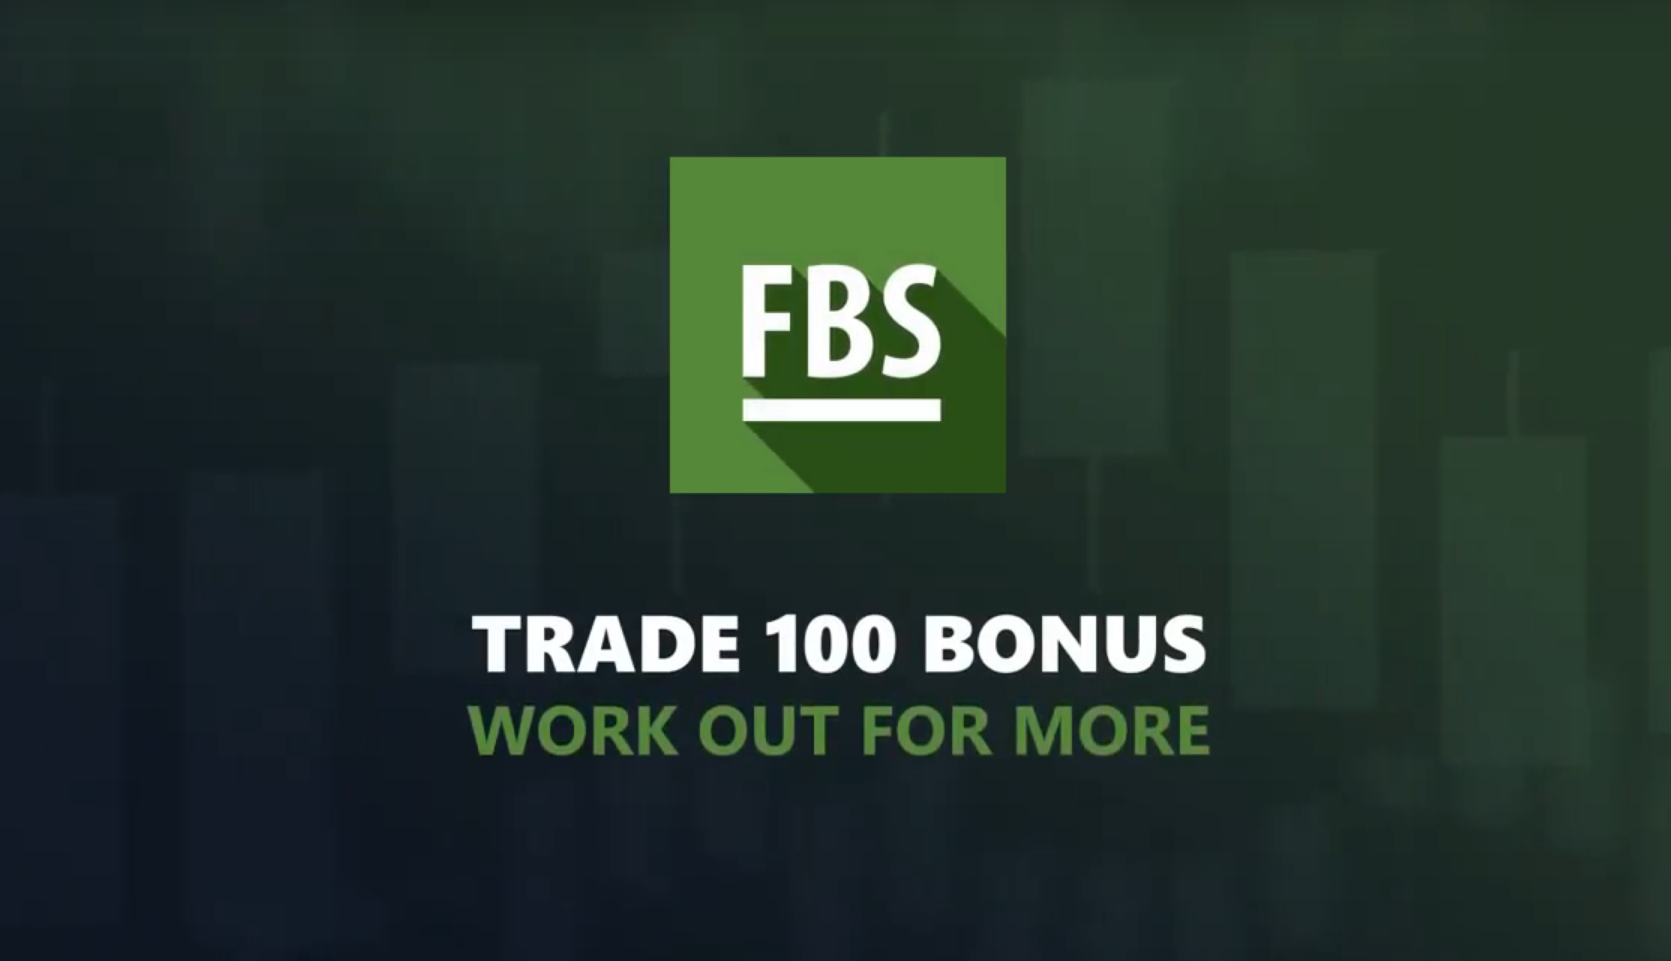 Trade 100 Bonus - Welcome bonus FBS!